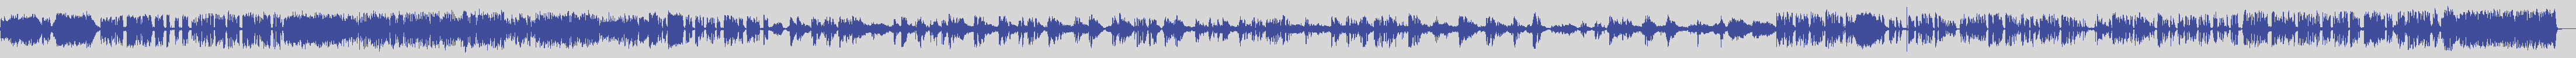 digiphonic_records [DPR010] Shep Fields, His Rippling Rhythm - This Little Ripple Has Rhythm [Original Mix] audio wave form